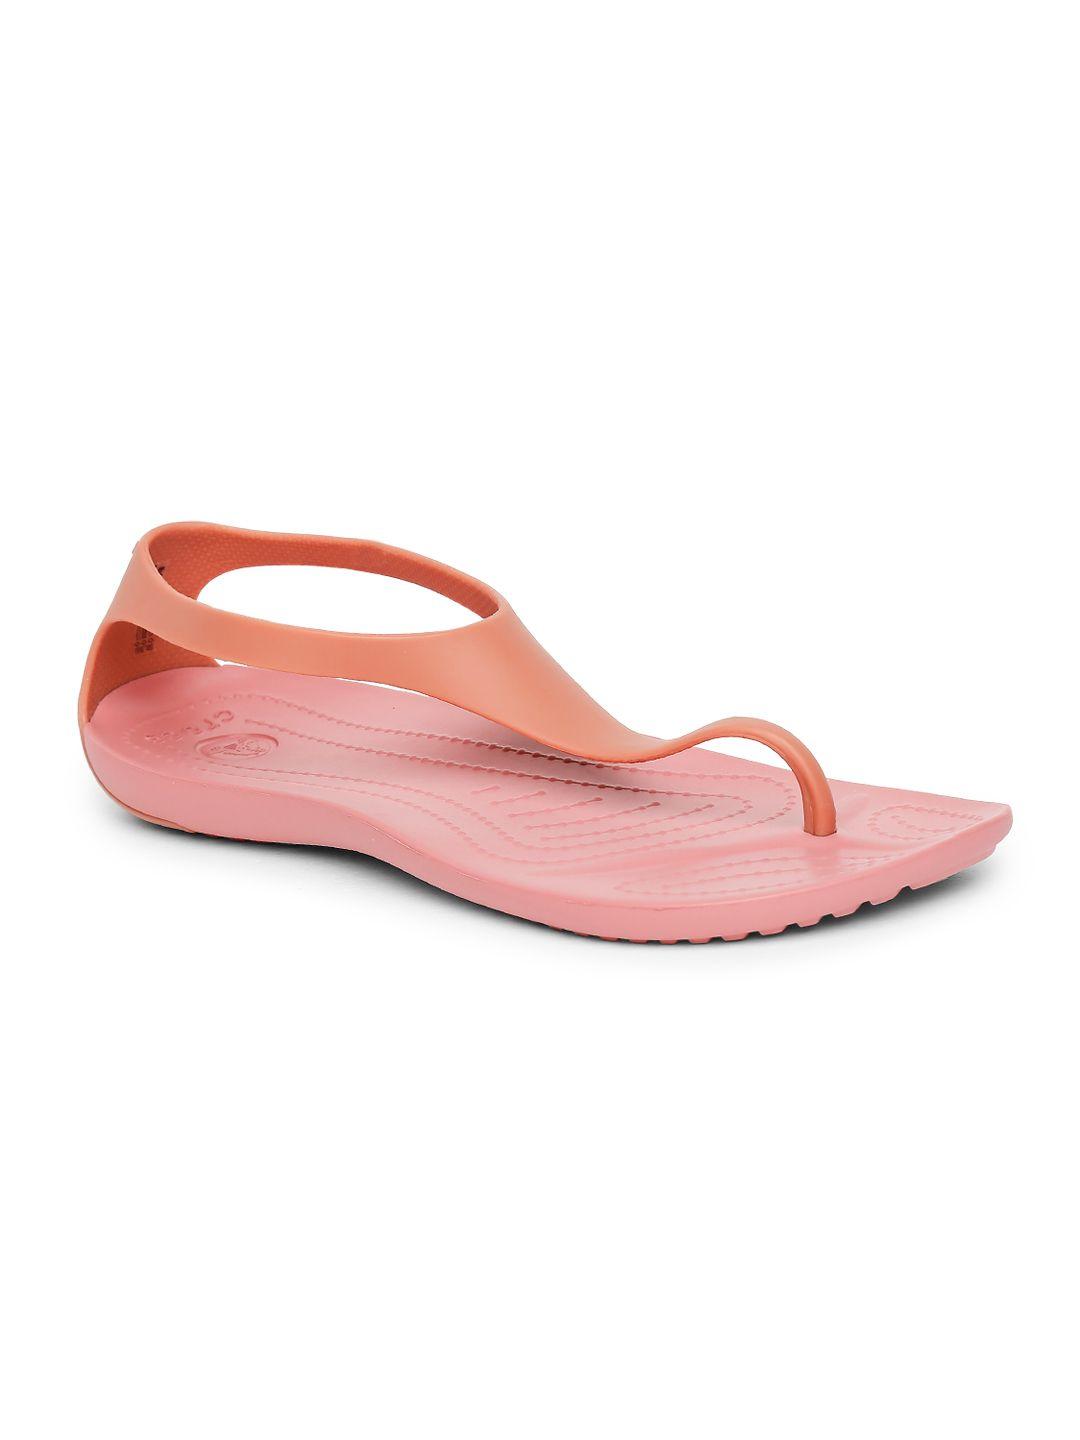 crocs-sexi--women-pink-solid-open-toe-flats